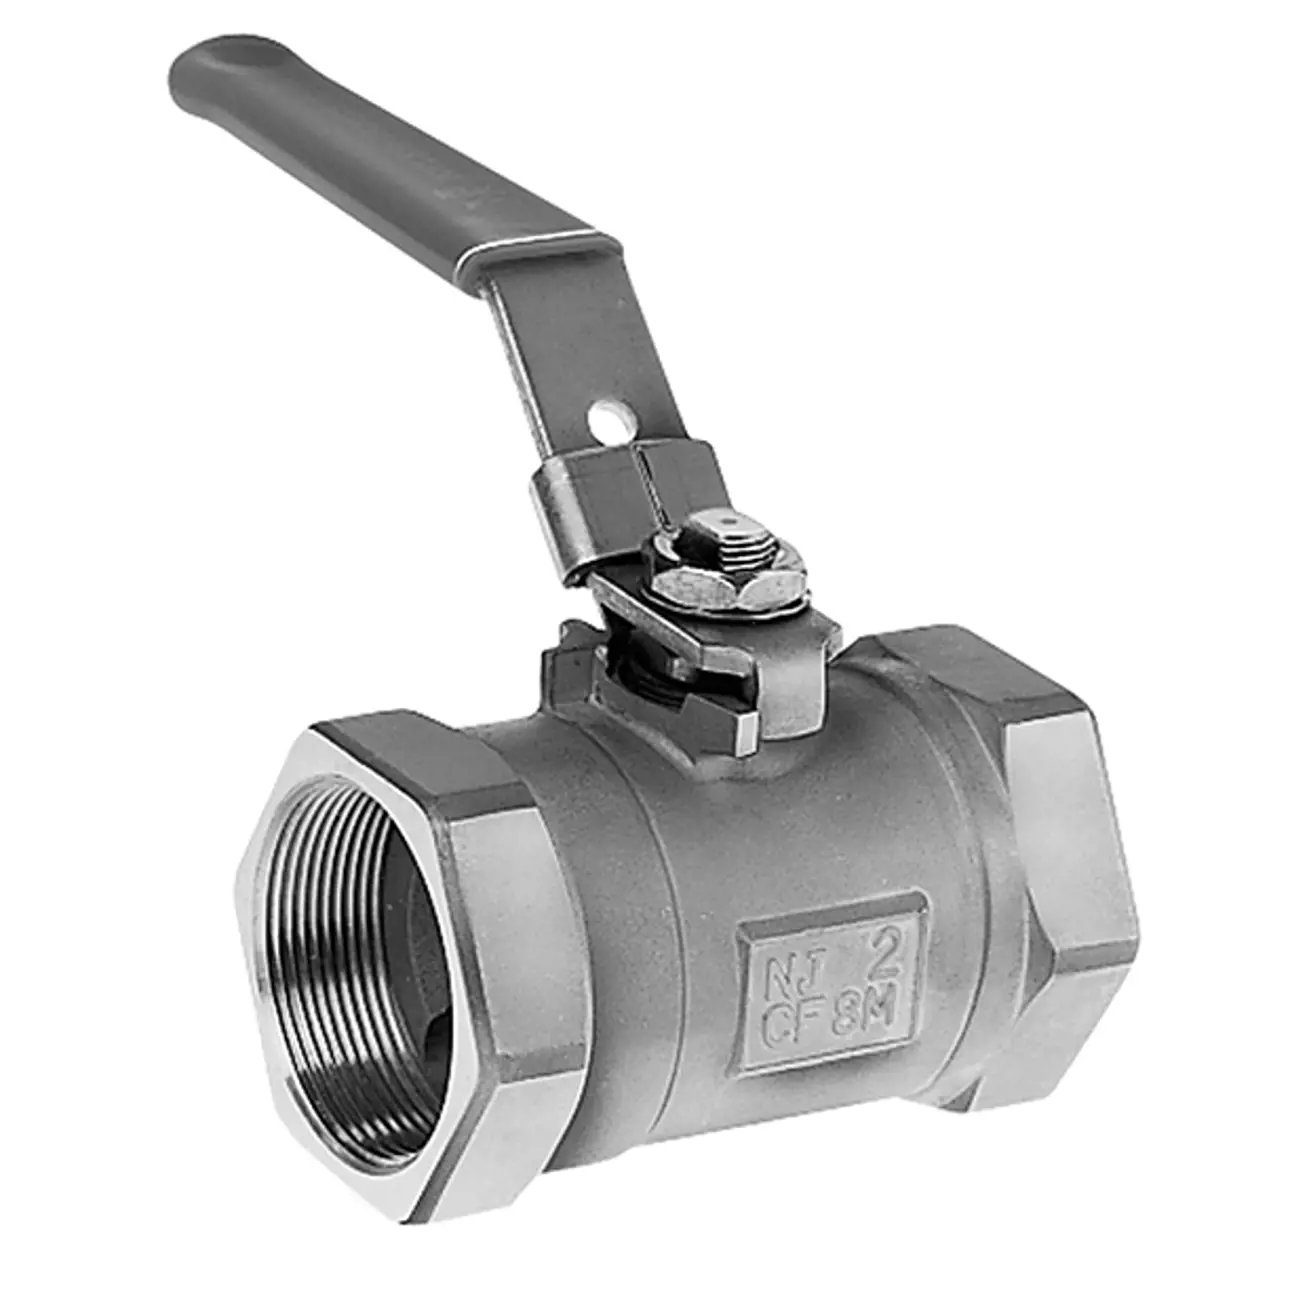 ValmetJamesbury™ ball valve, series 33R